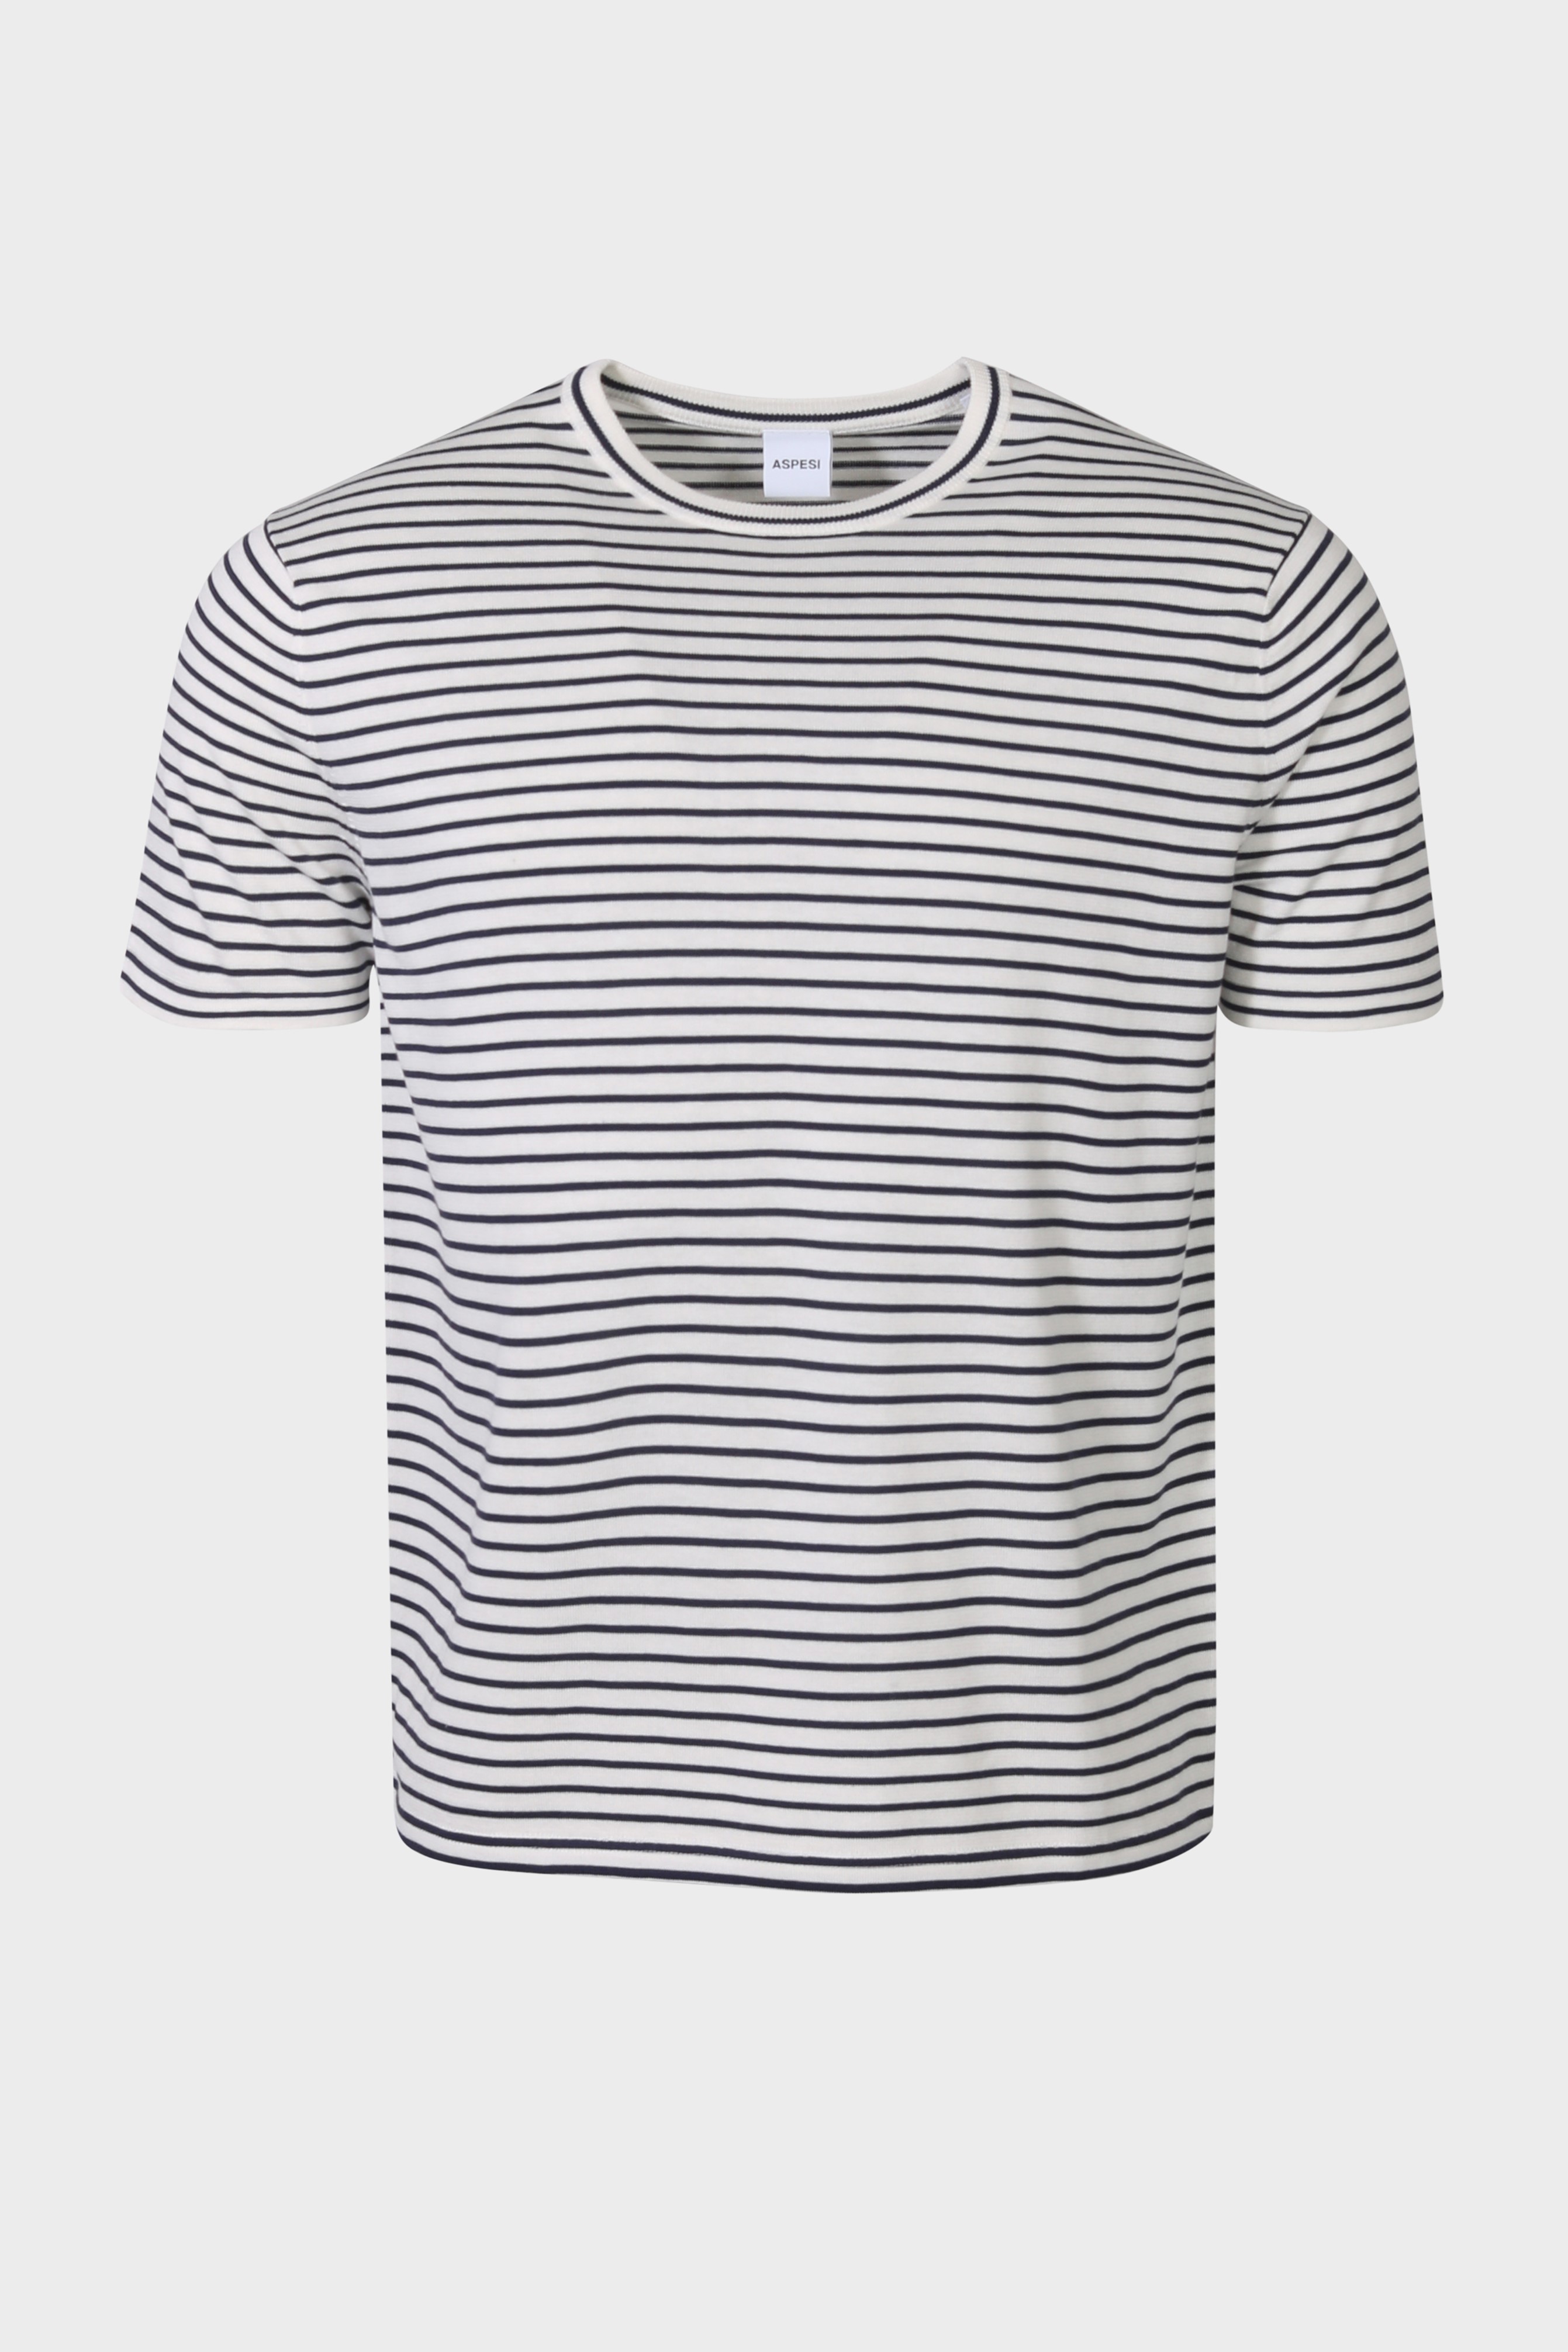 ASPESI Striped Knit T-Shirt in Navy/White